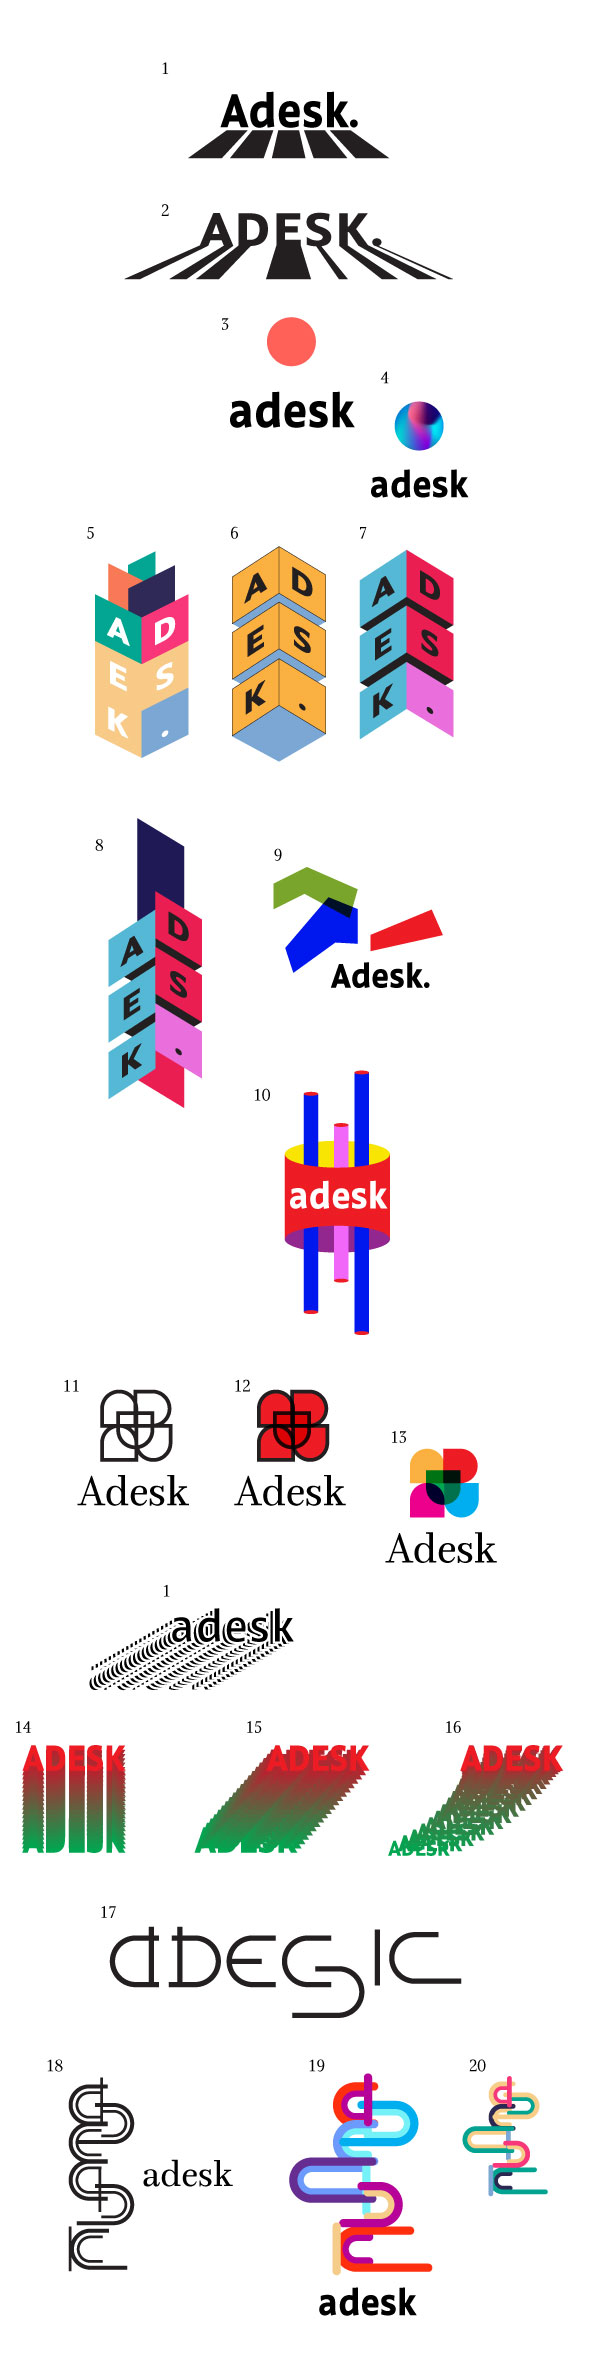 adesk process 01